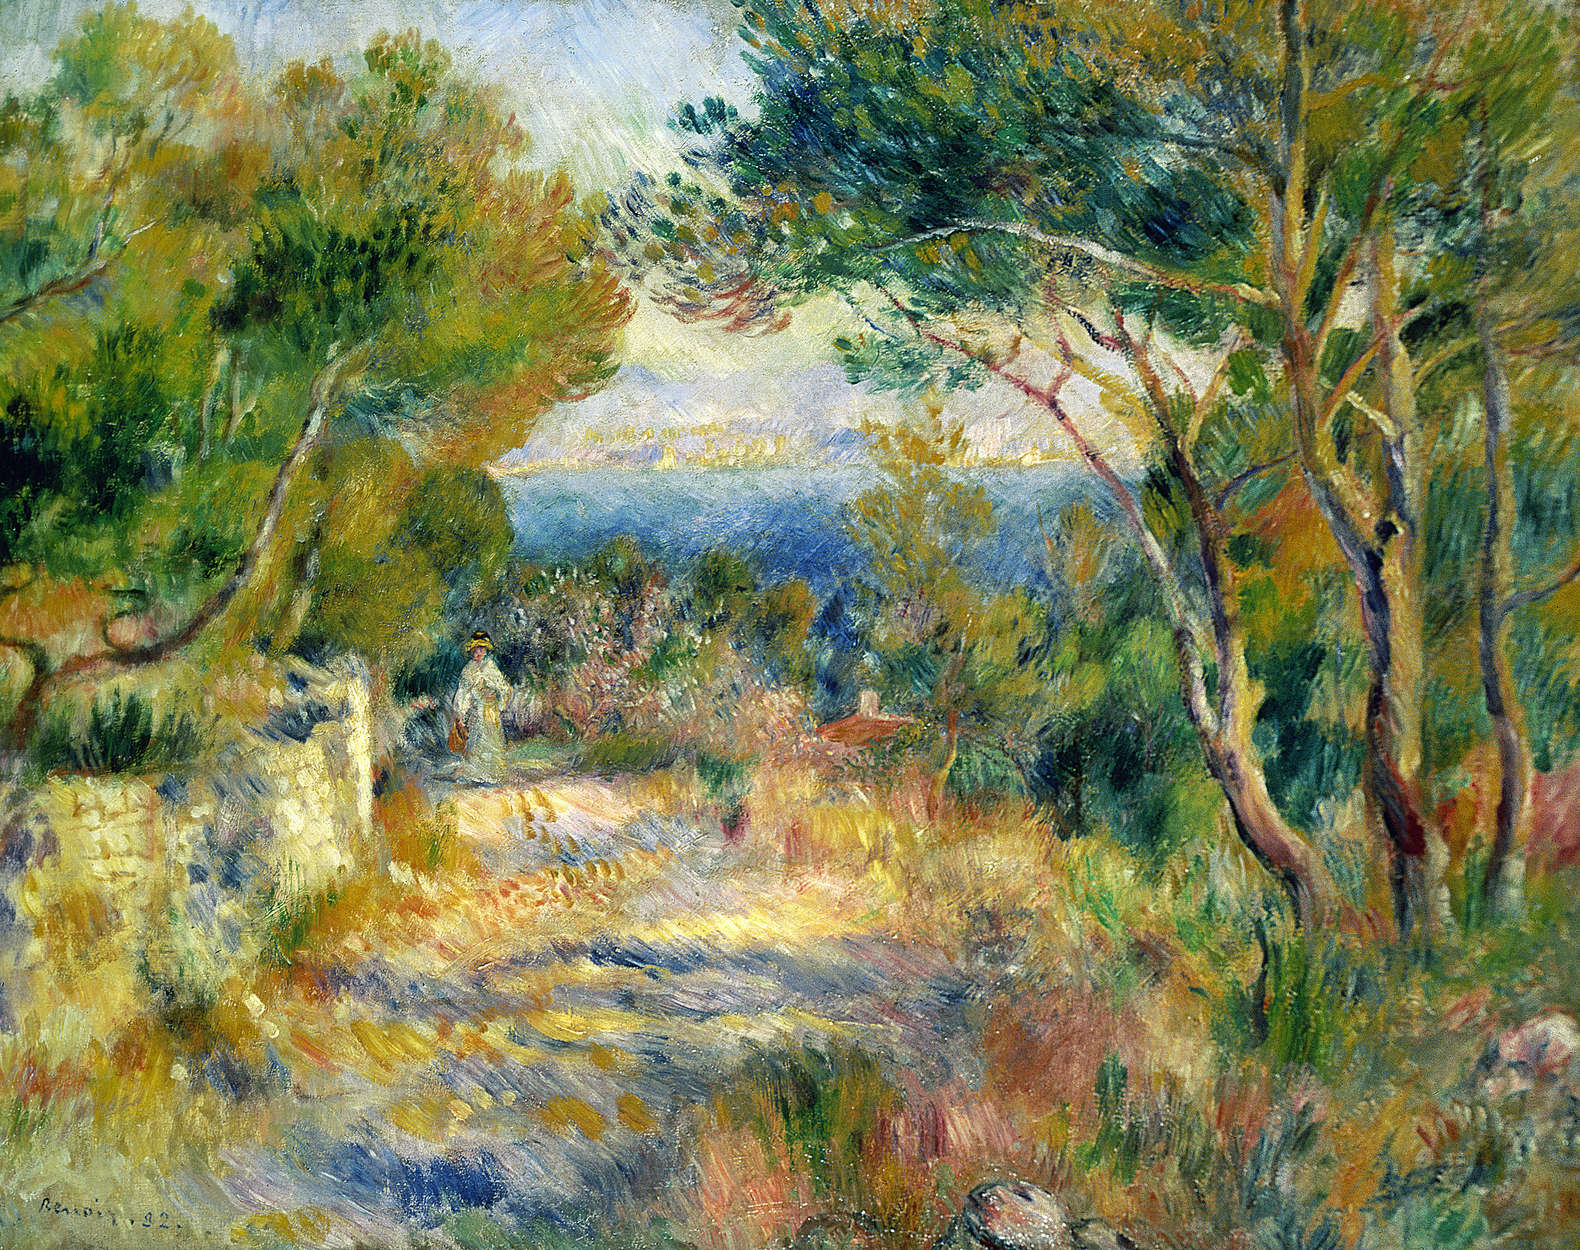             Carta da parati fotografica "L'Estaque" di Pierre Auguste Renoir
        